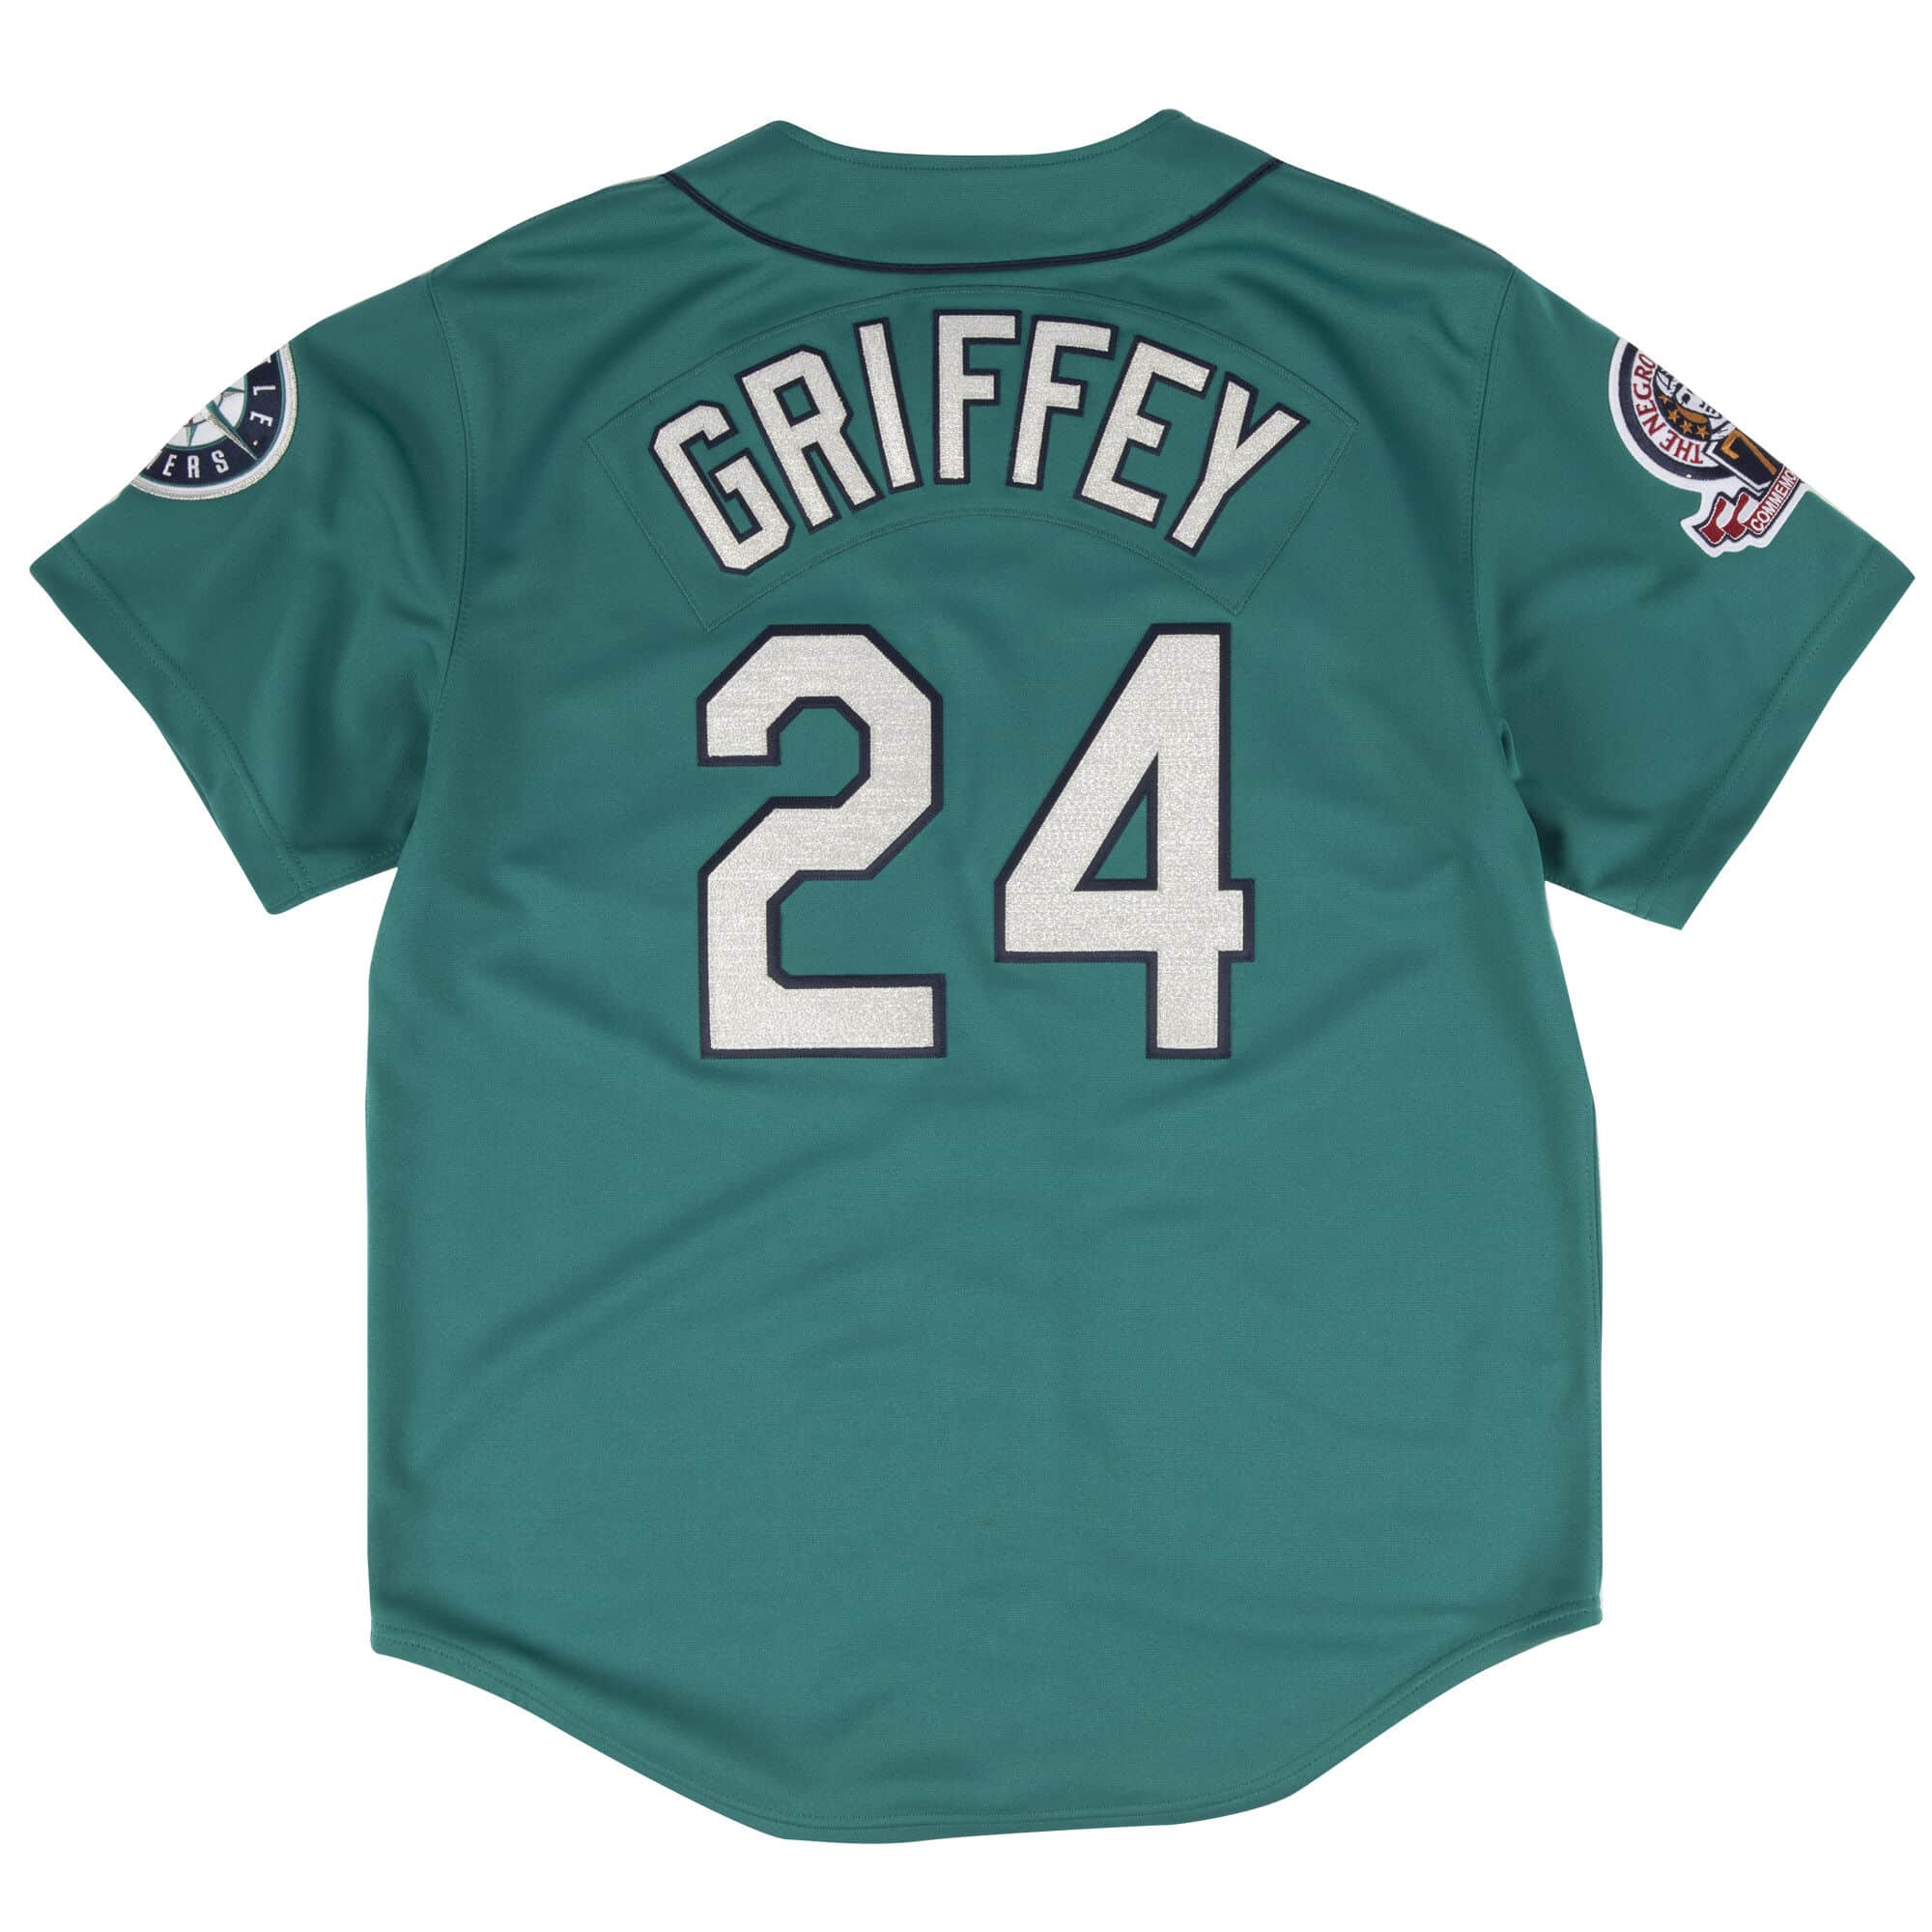 Ken Griffey Junior Jersey for Sale in Seattle, WA - OfferUp